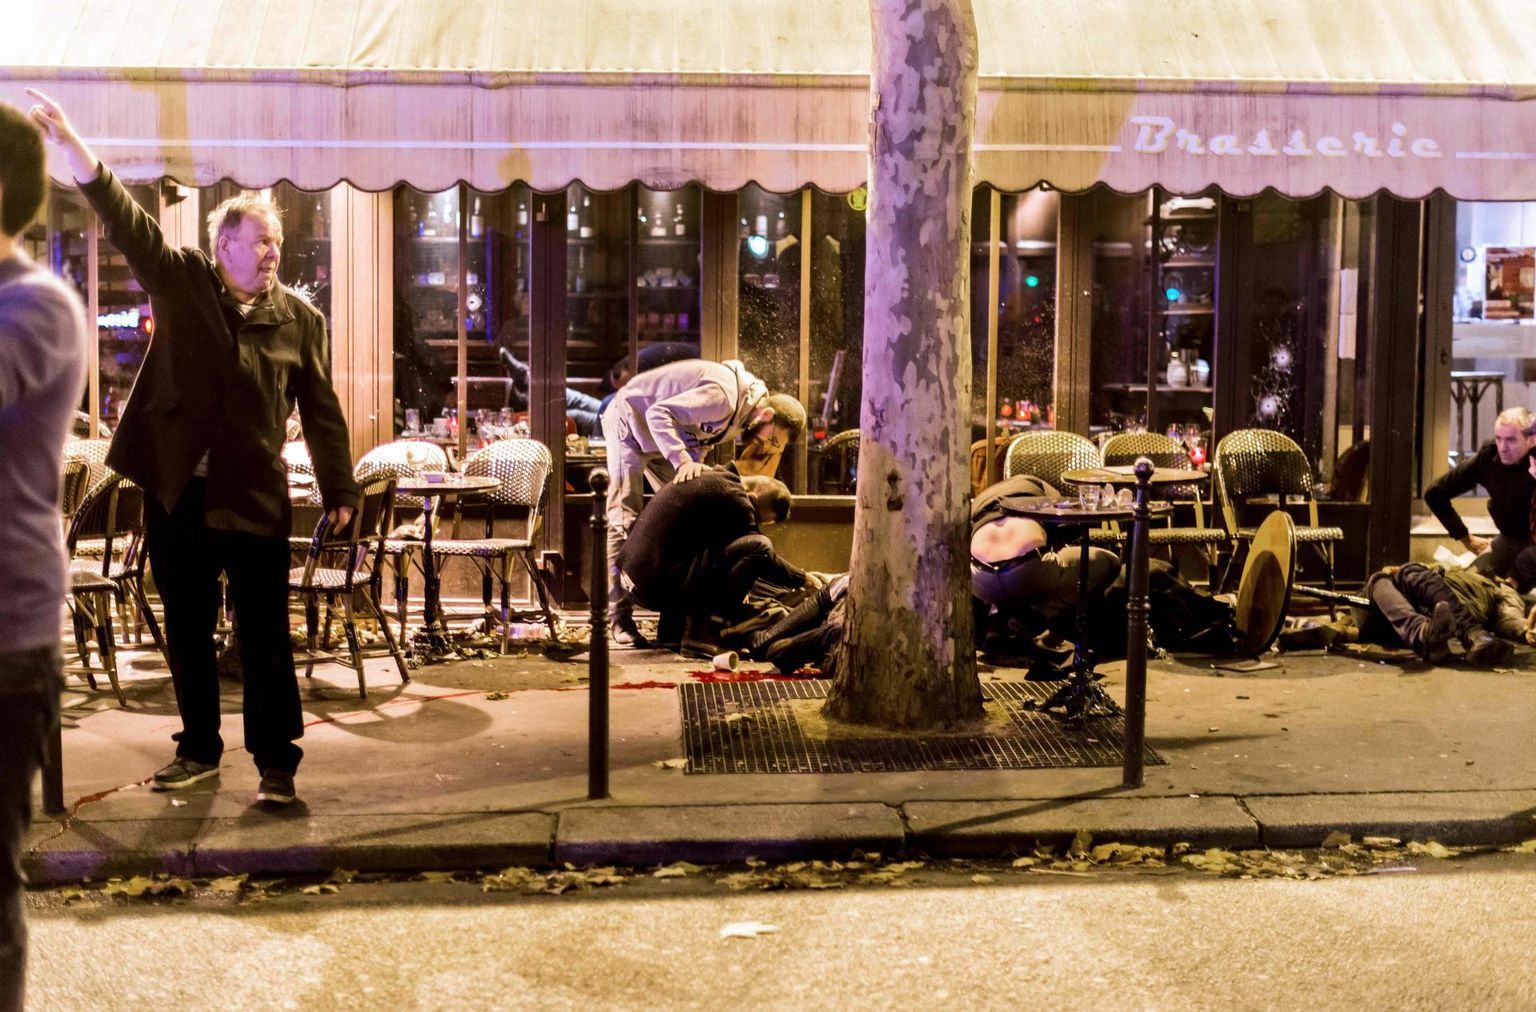 ISISe terrorirünnaku ohvrid 2015. aasta 13. novembril Pariisi Café Bonne Bière’i terrassil. 